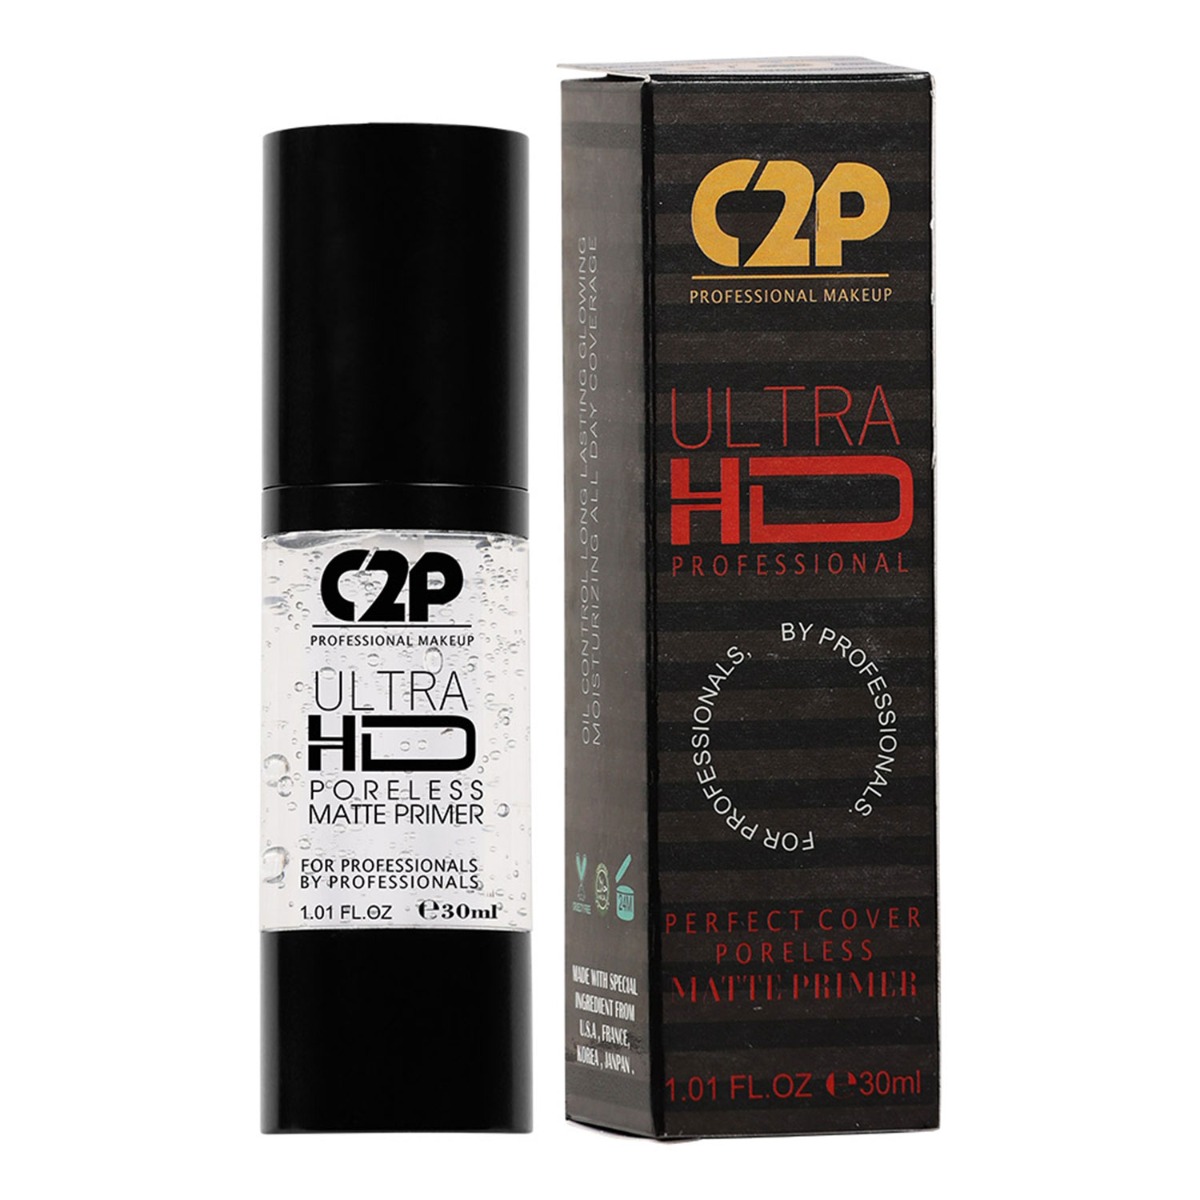 C2P Pro Ultra HD Poreless Matt Primer, 30 ml